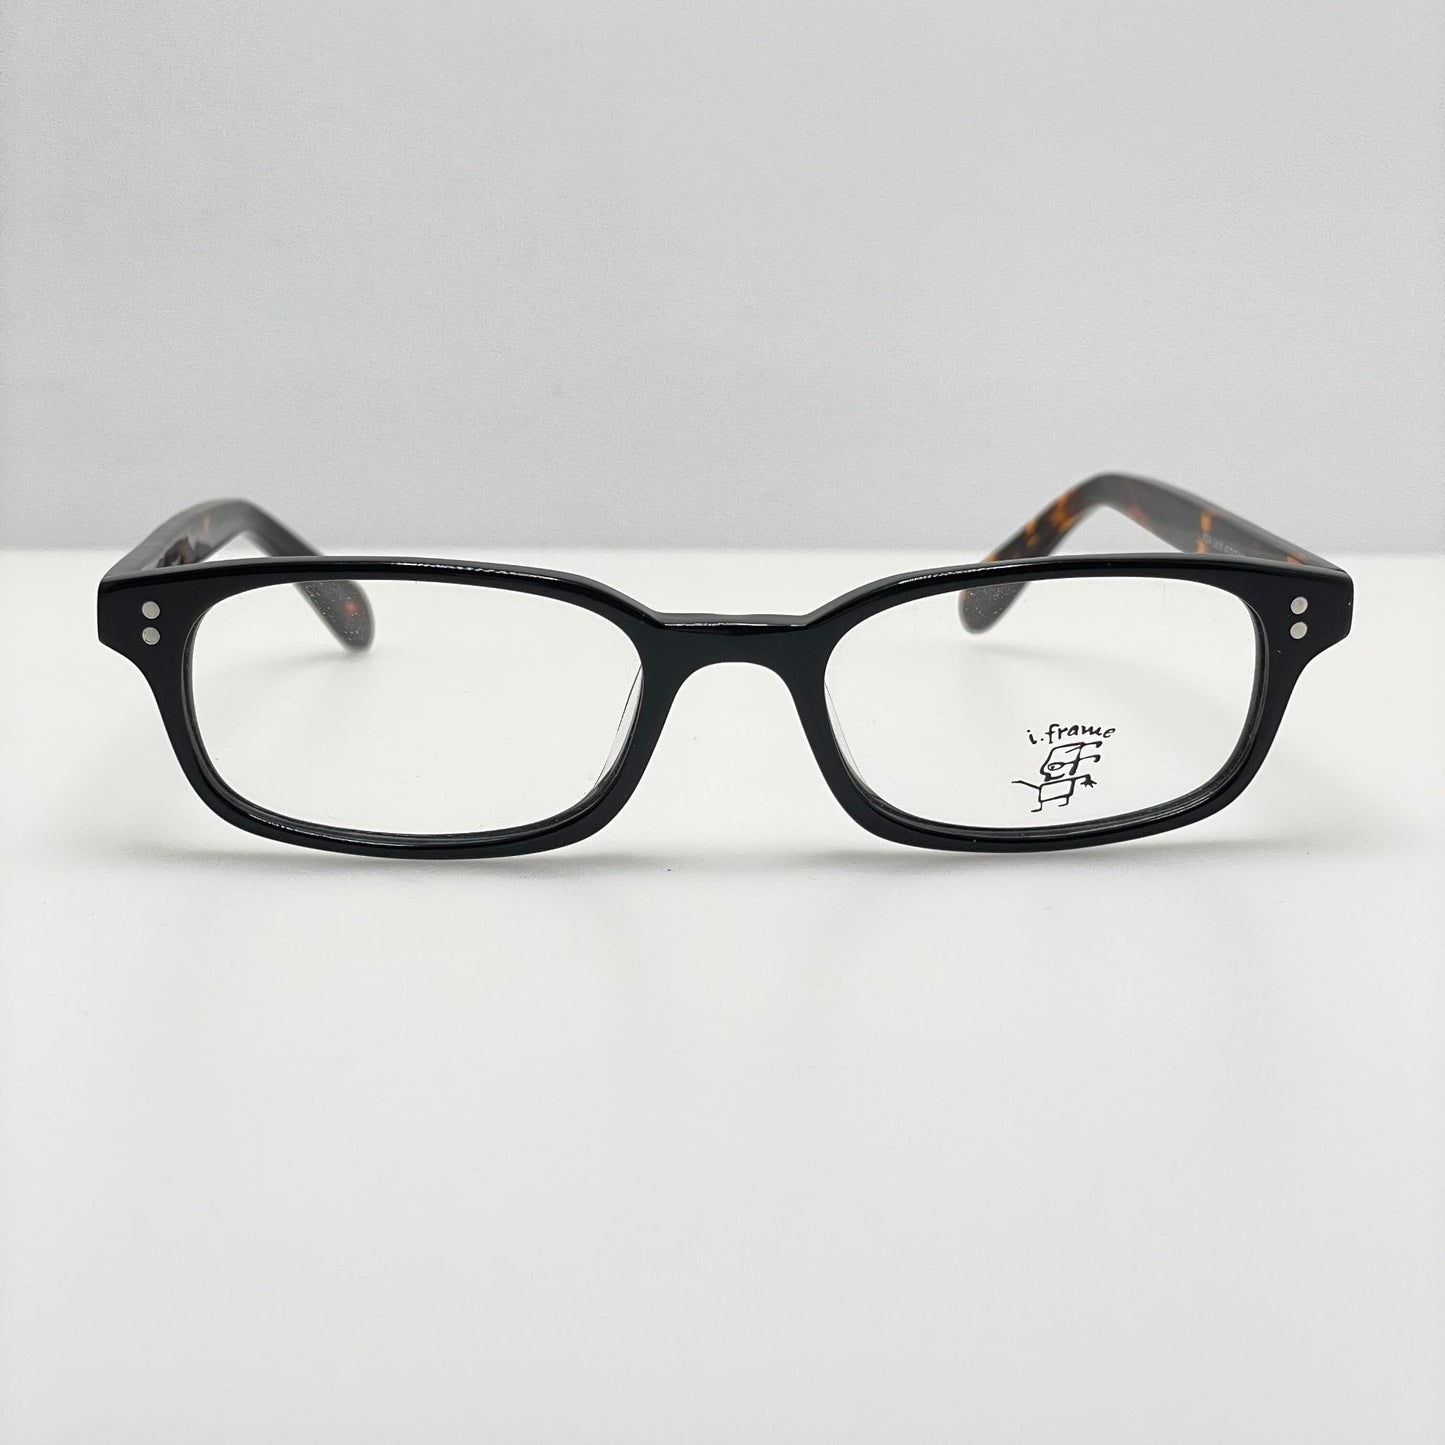 I.Frame Eye Glasses Eyeglasses Frames M264 col 91 47-17-140 Kids Youth